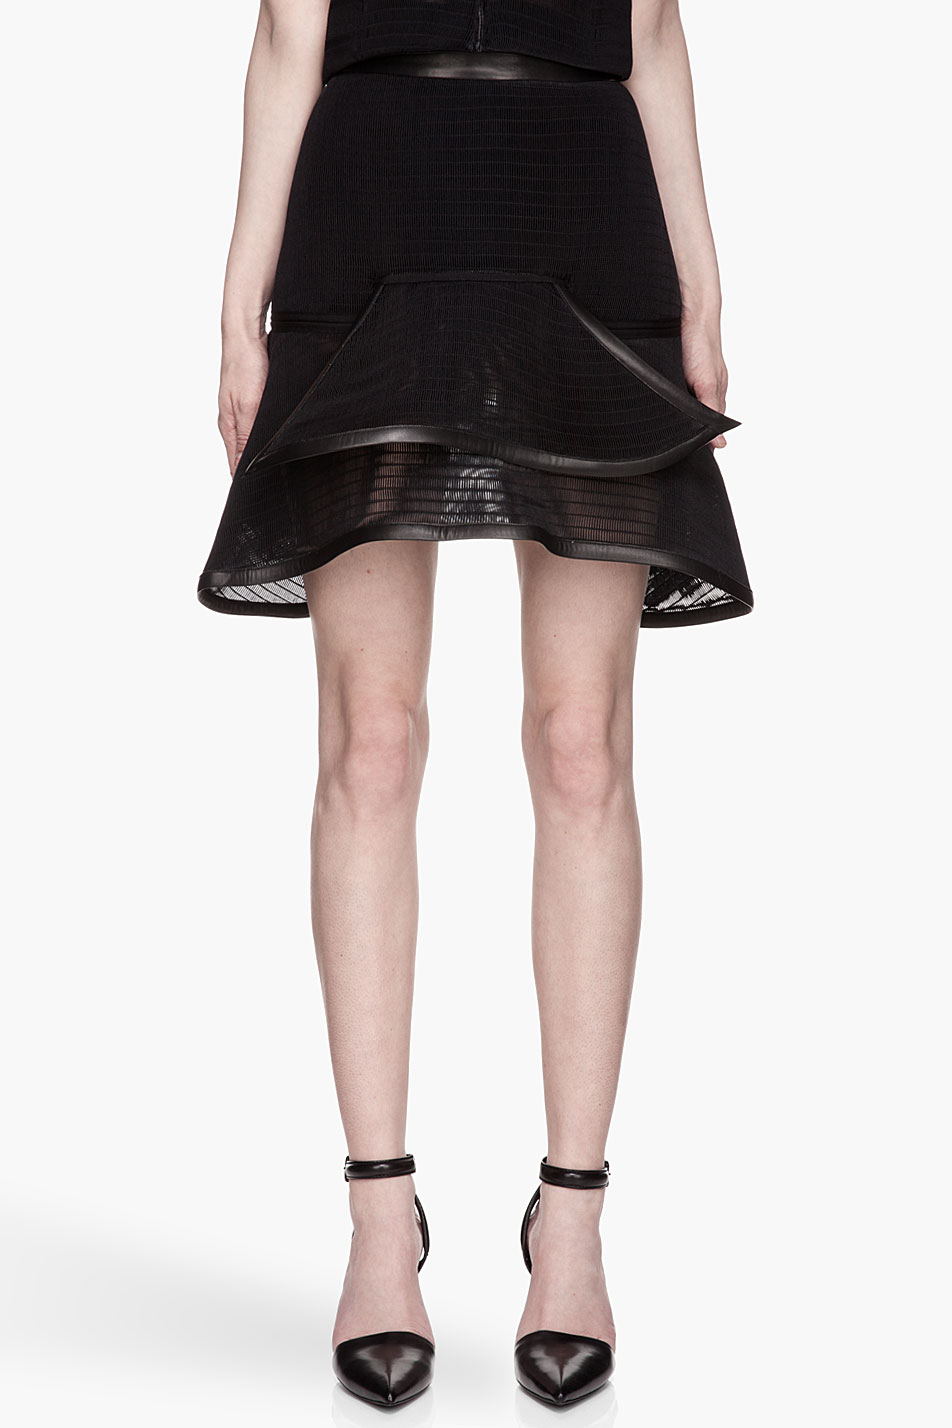 Lyst - Mugler Black Net and Leather A-Line Mini-Skirt in Black